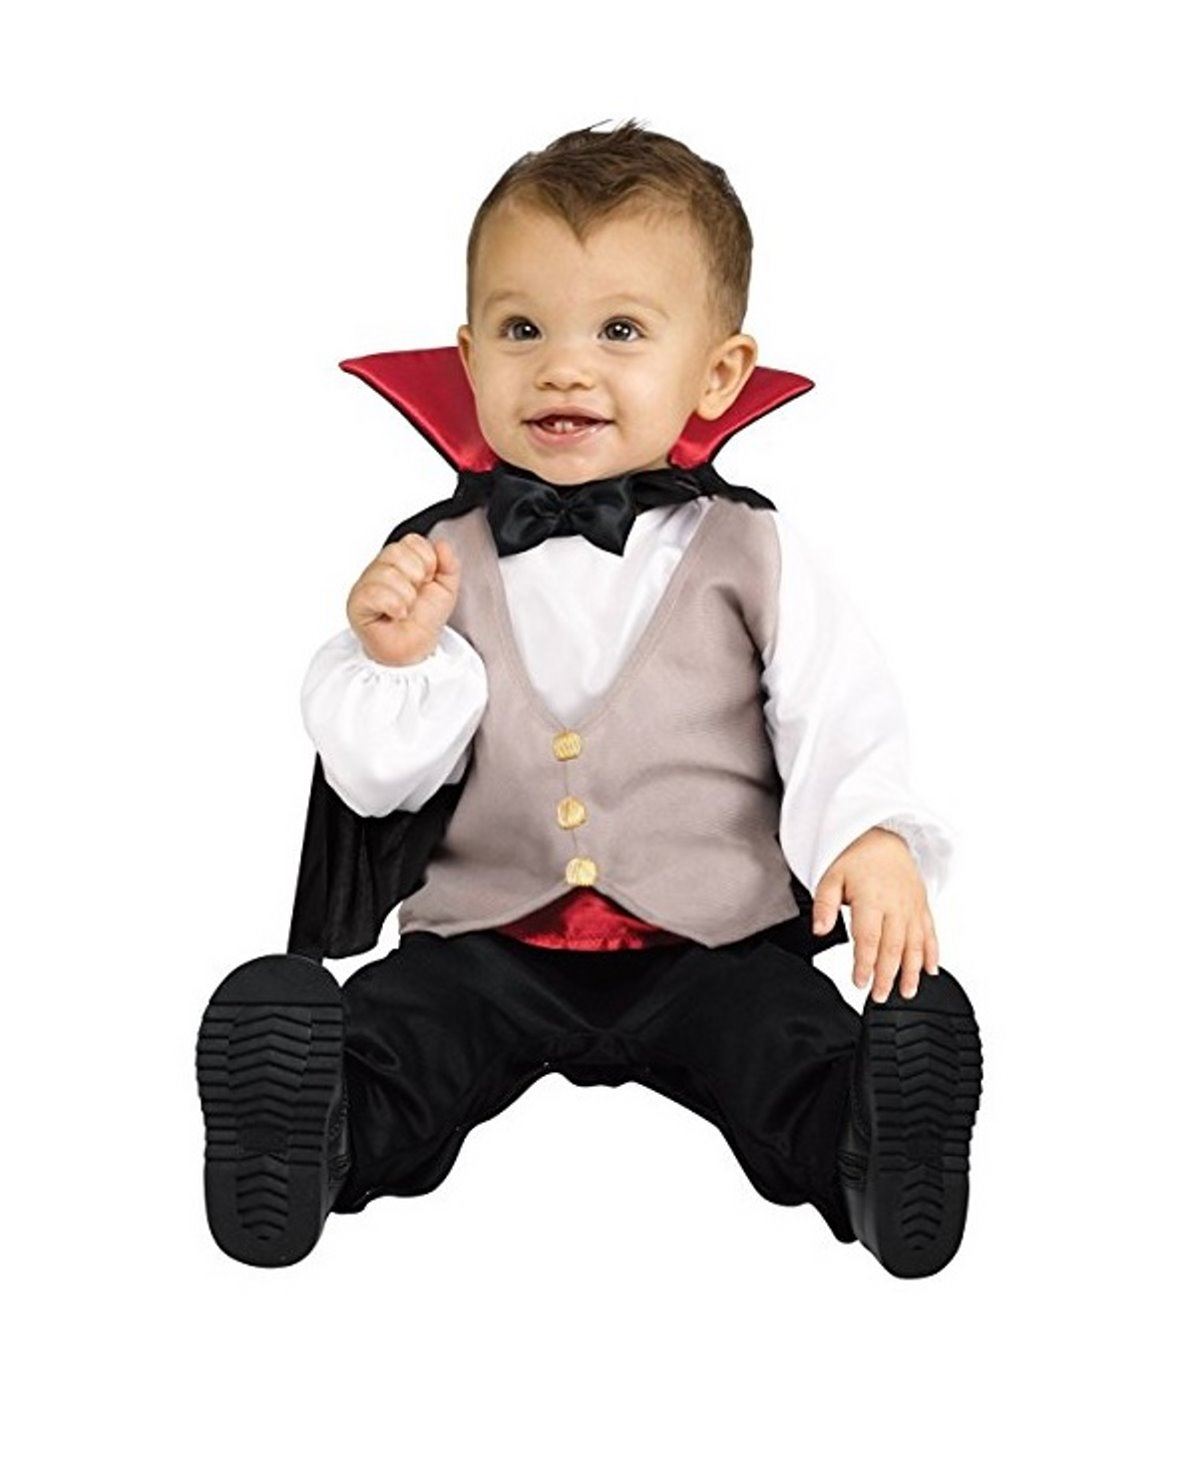 Halloween KostÃ¼me FÃ¼r Kleinkinder Elegant Kleinkinder Halloween Kostüm Kleid Outfit Overall Baby